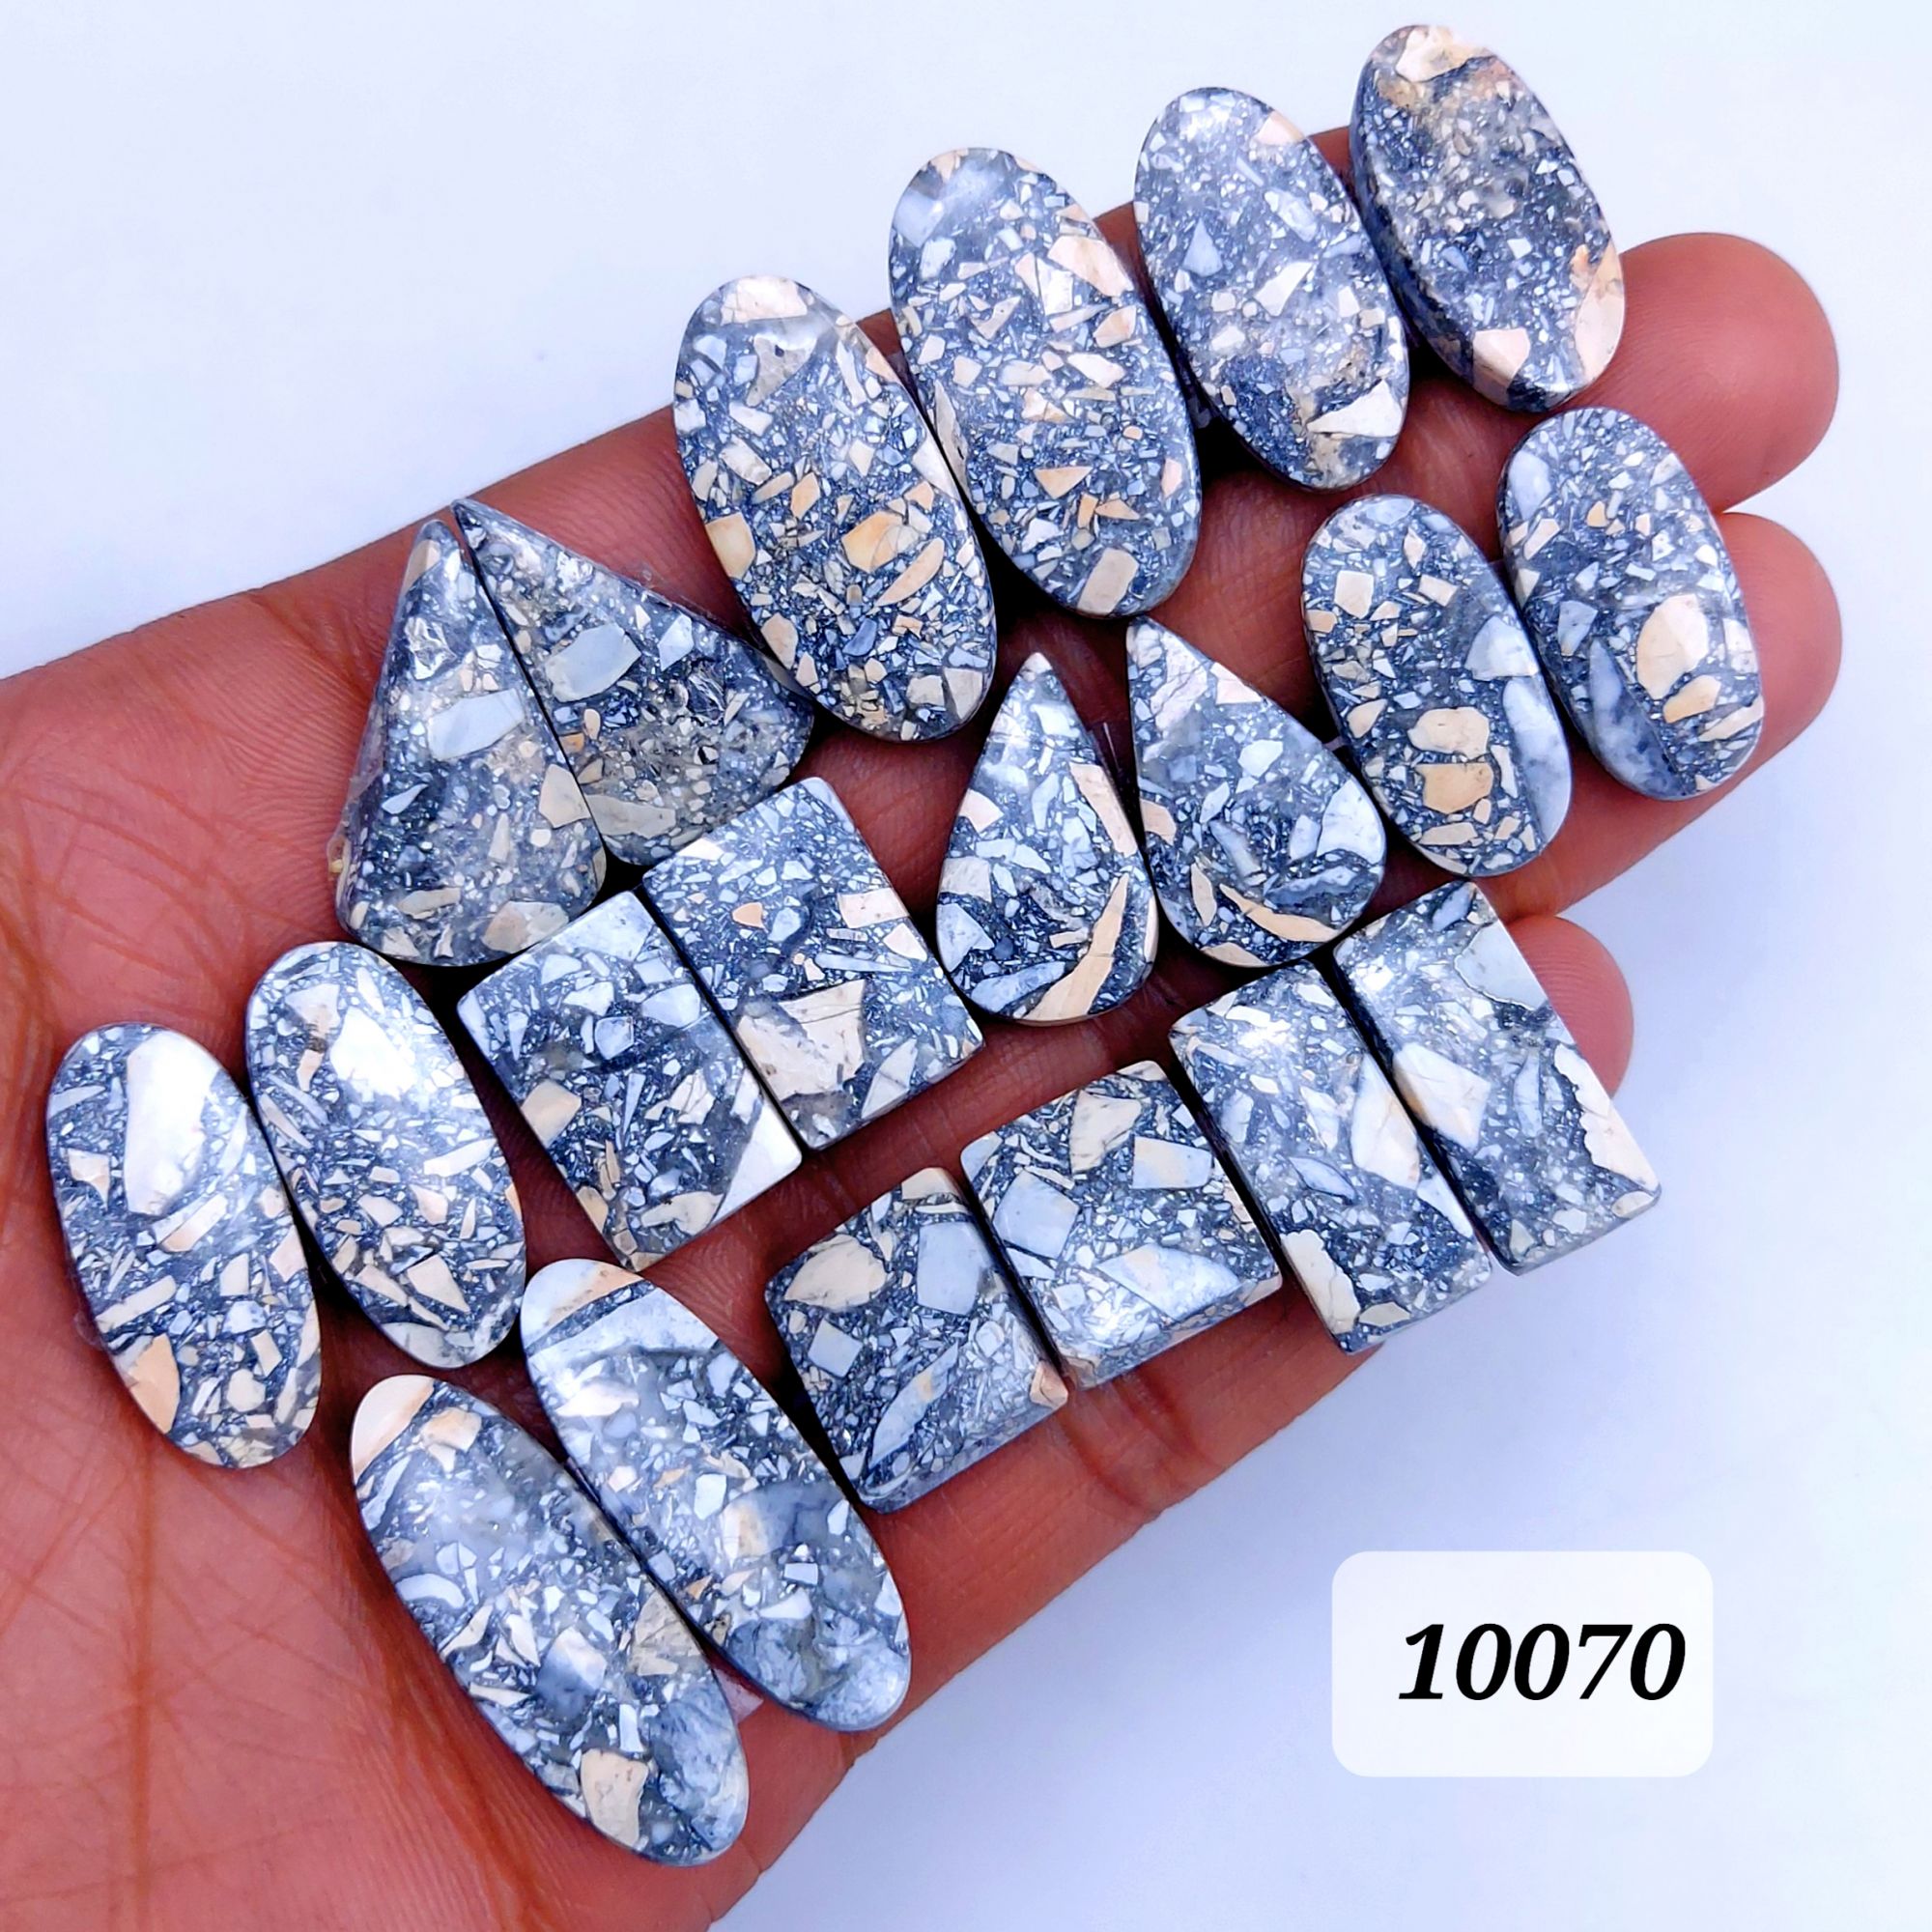 10Pcs 293Cts Natural Maligano Jasper Cabochon Pair Lot Back Side Unpolished Semi-Precious Gemstones For Jewelry Making 32x11 23x13mm #10070